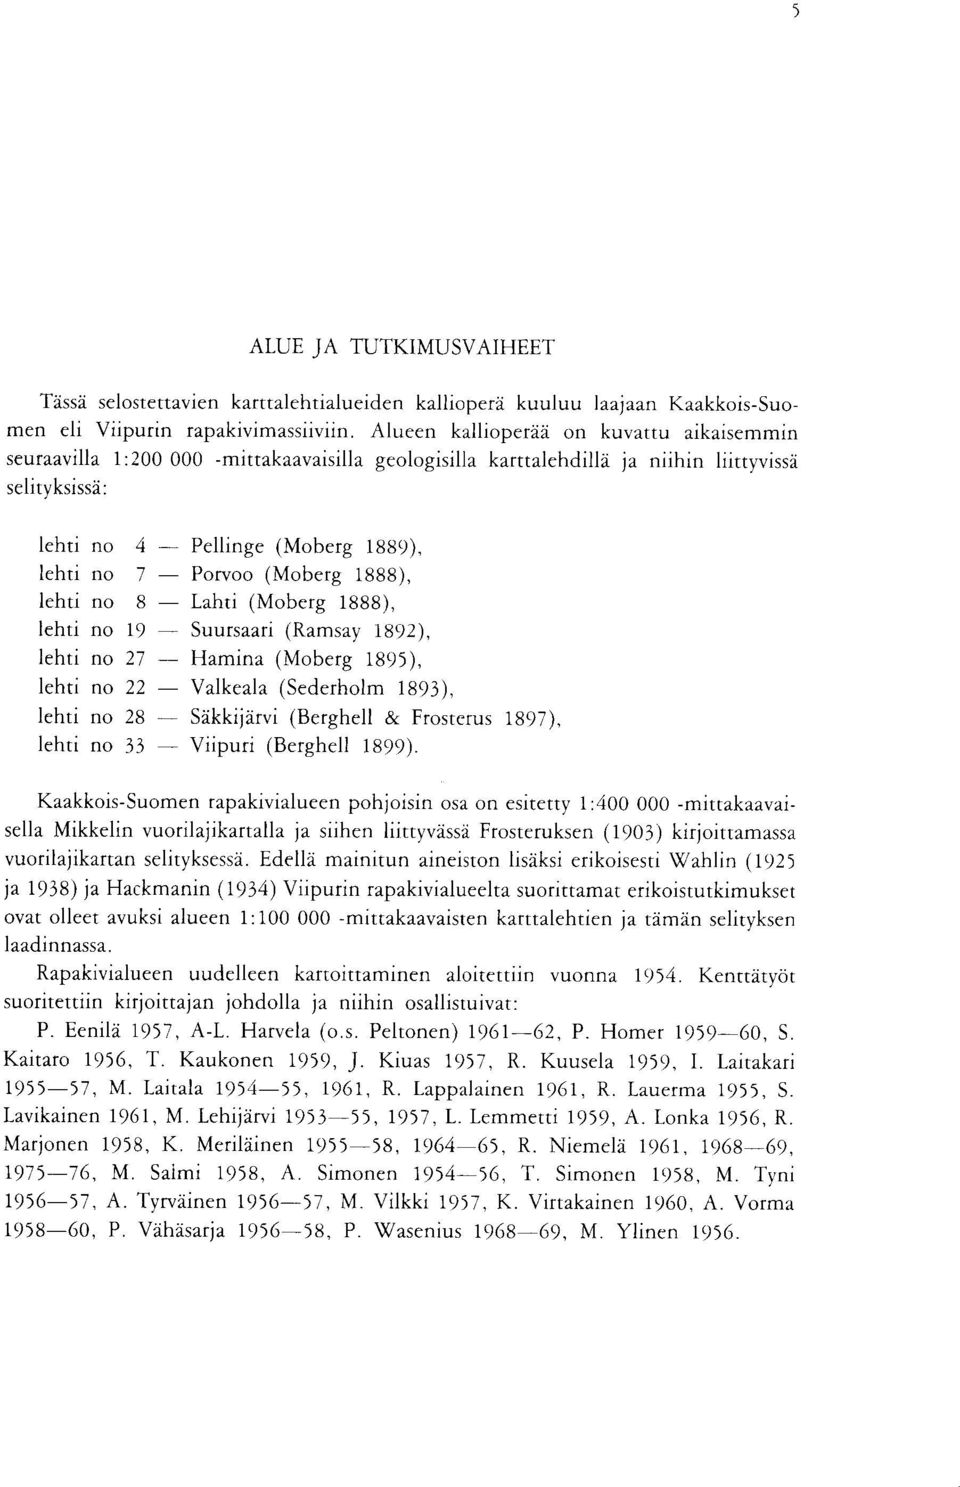 lehti no 19 - Suursaari (Ramsay 1892), lehti no 27 Hamina (Moberg 1895), lehti no 22 Valkeala (Sederholm 1893), lehti no 28 Sakkijarvi (Berghell & Frosterus 1897), lehti no 33 Viipuri (Berghell 1899)